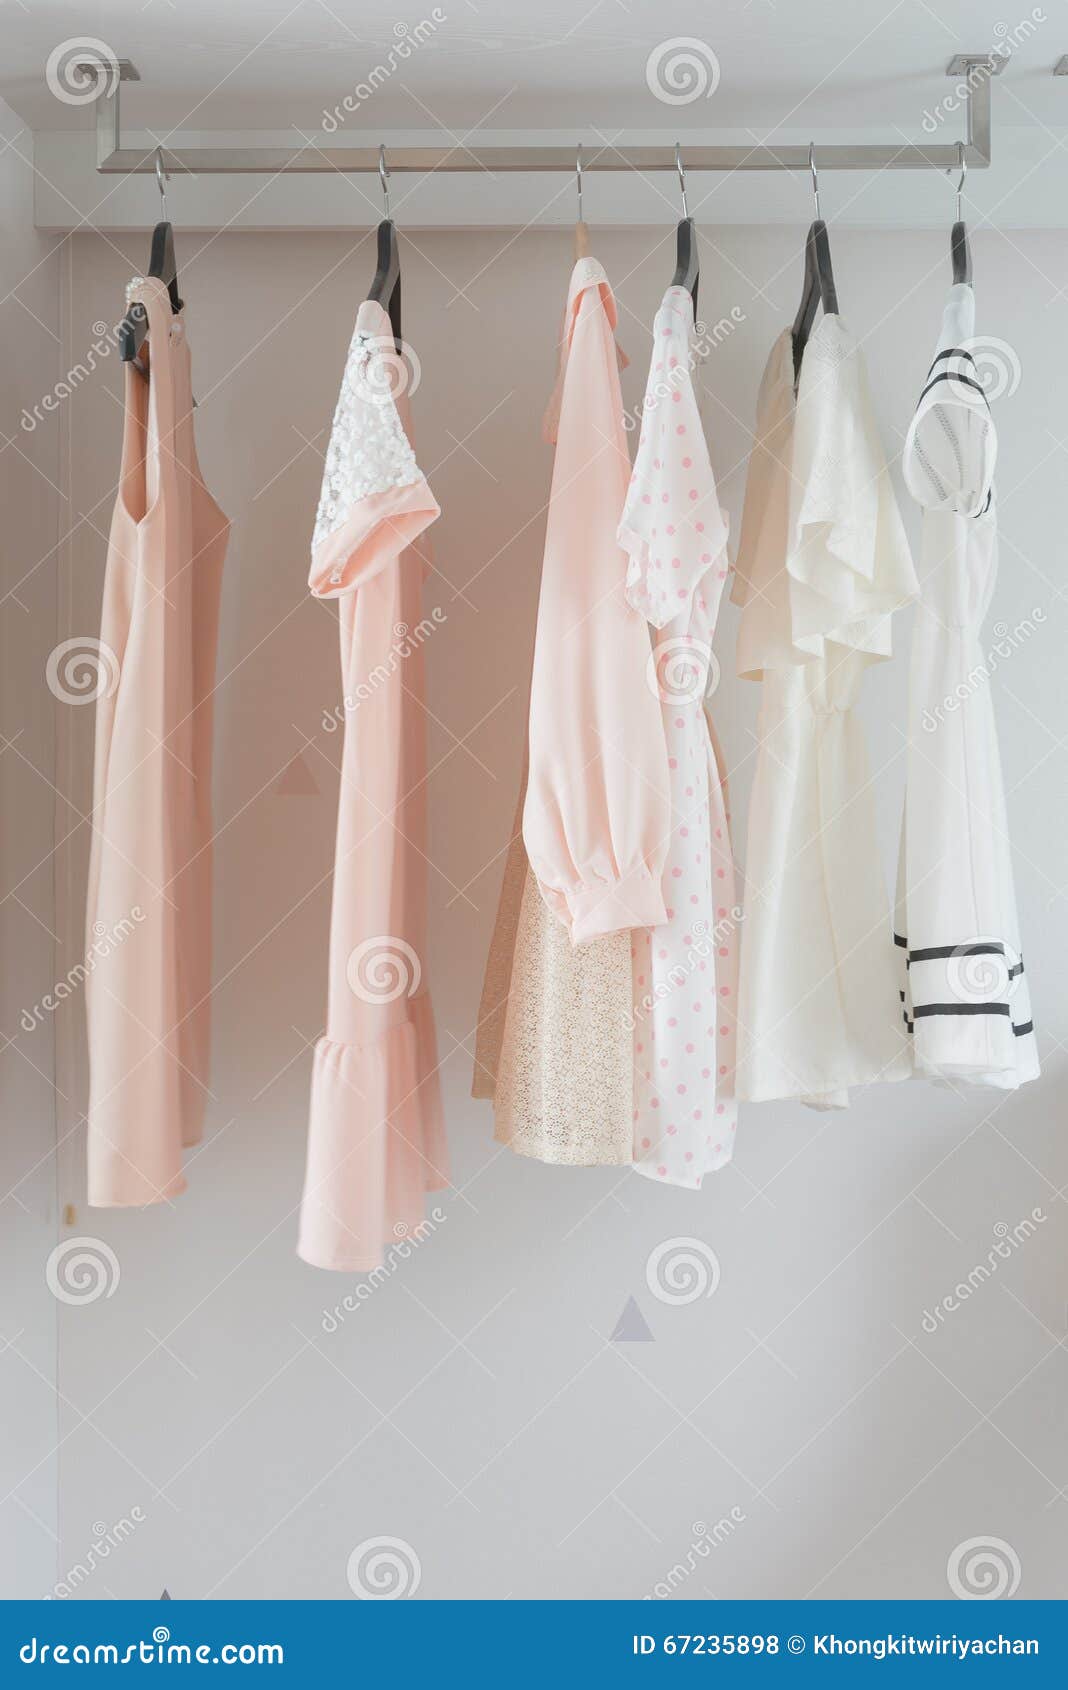 Dress hanging on rail stock photo. Image of style, boxes - 67235898